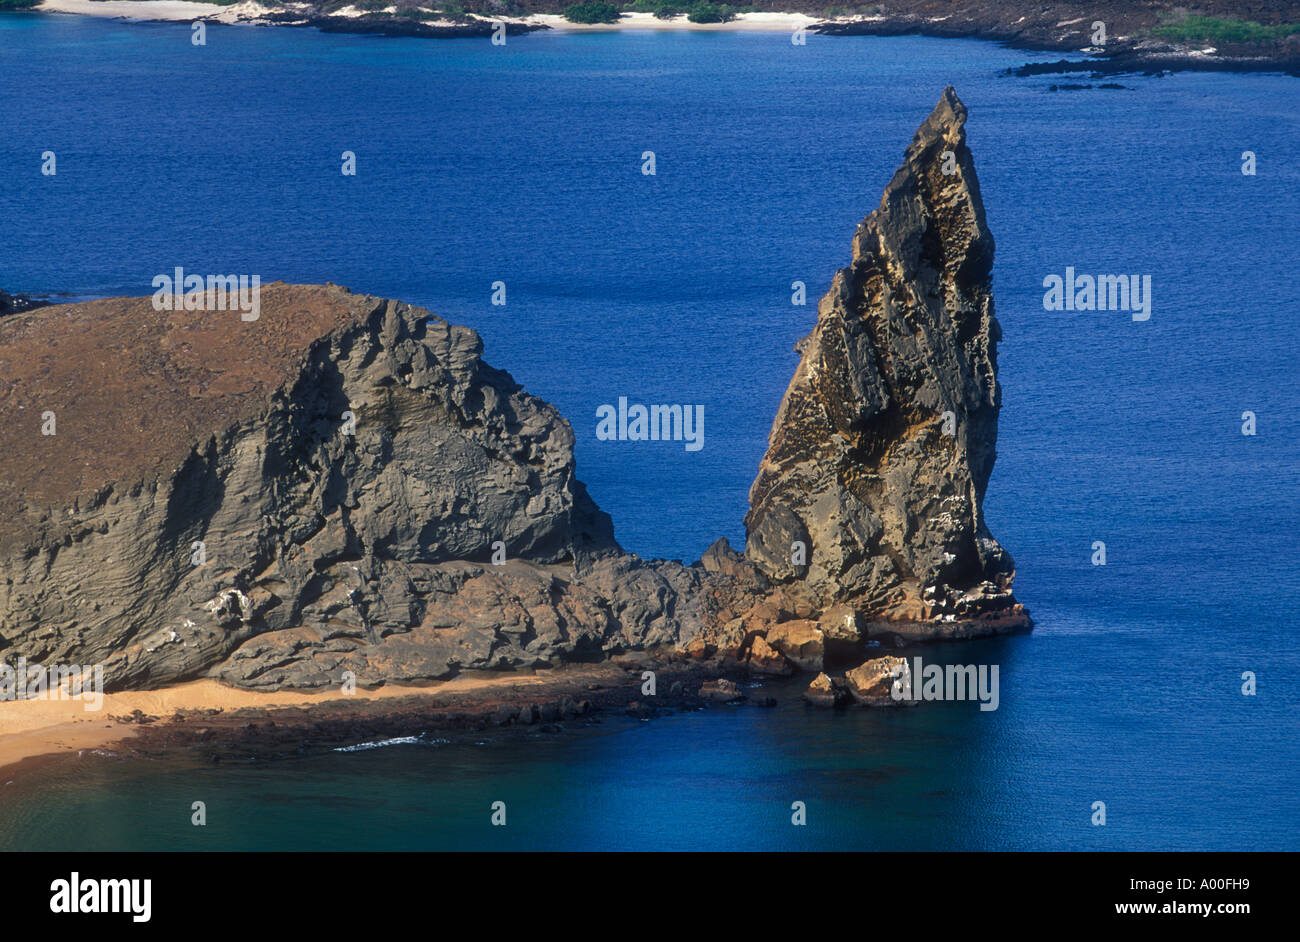 Pinnacle Rock Bartolome Island Galapagos an ancient volcanic plug and well known landmark Stock Photo